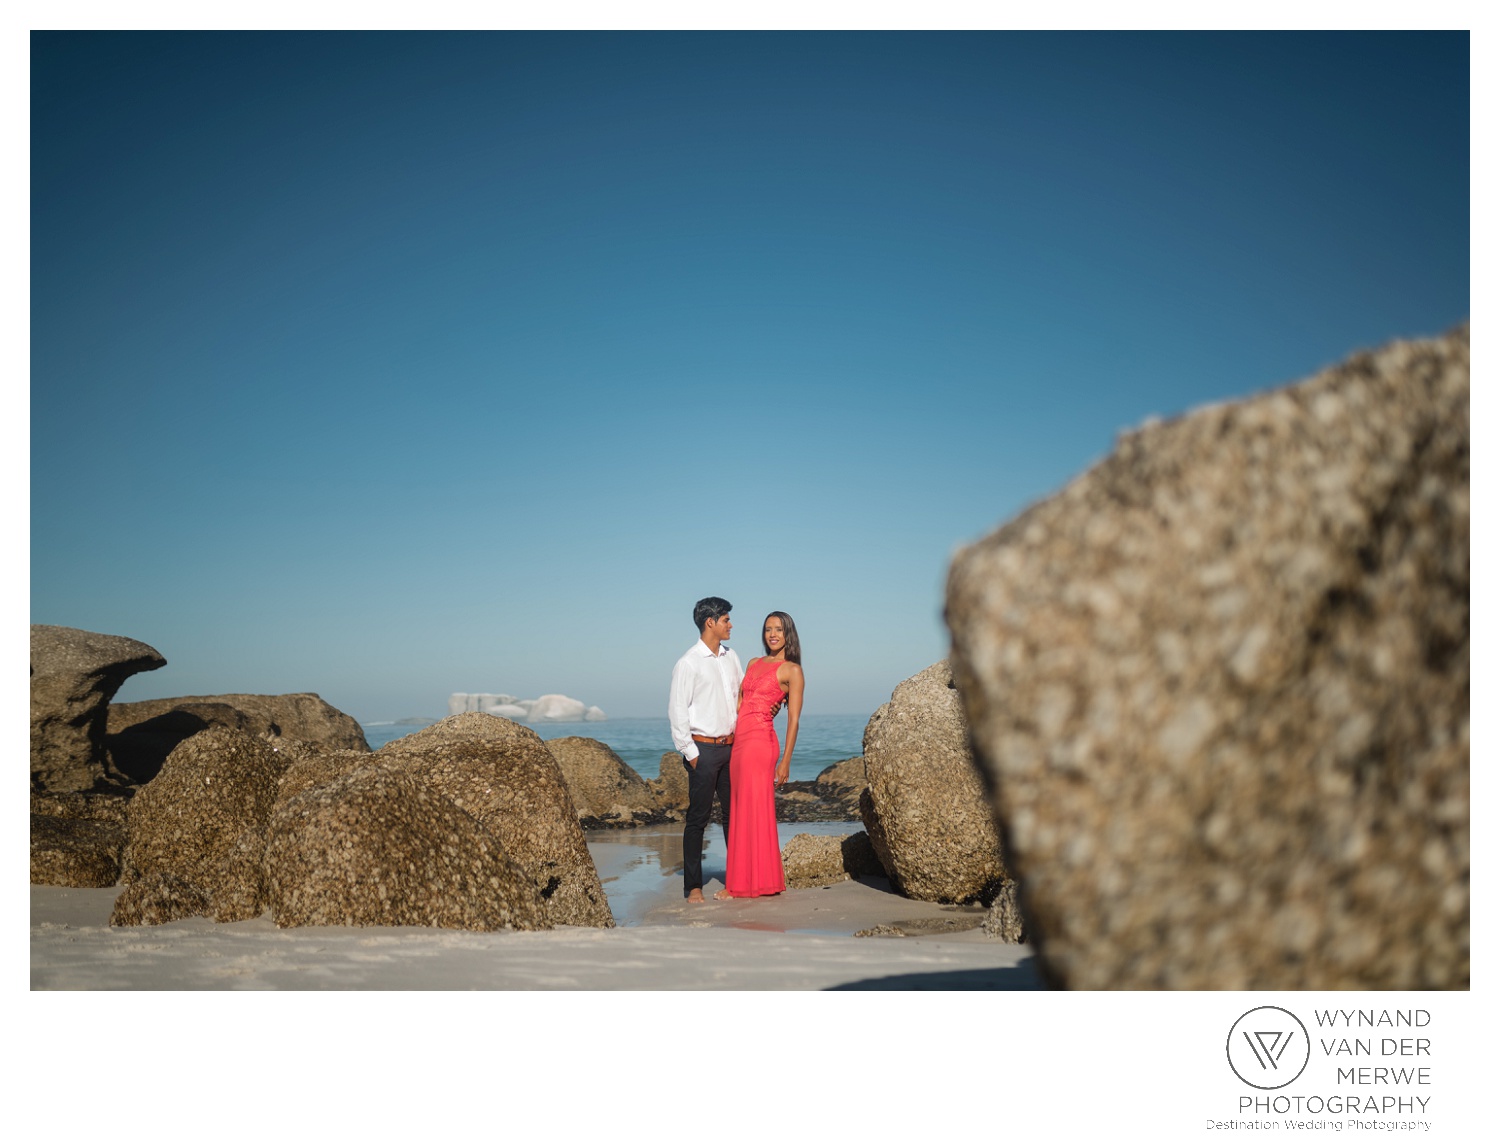 WvdM_engagementshoot_engaged_couple_prewedding_llandudno_cliftonbeach_beach_formal_southafrica_weddingphotographer_greernicolas-99.jpg